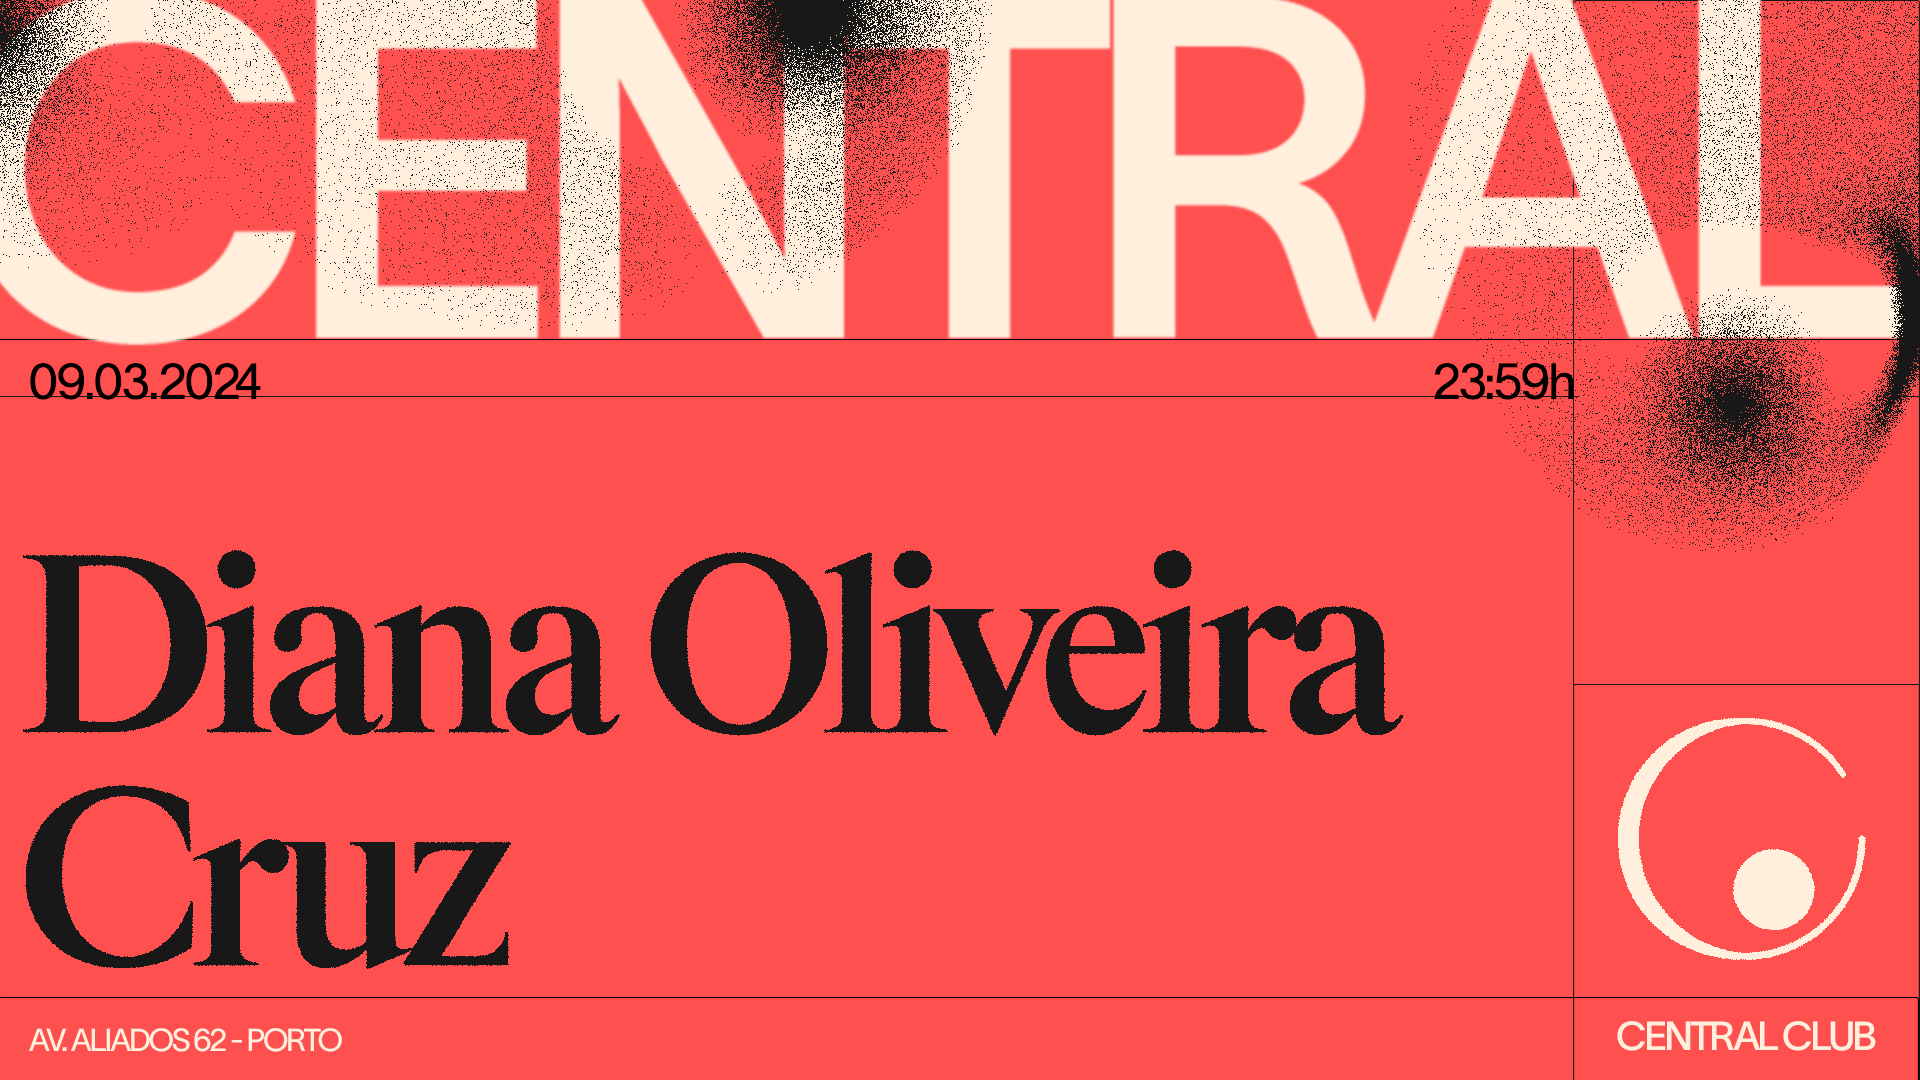 Diana Oliveira + Cruz - フライヤー表